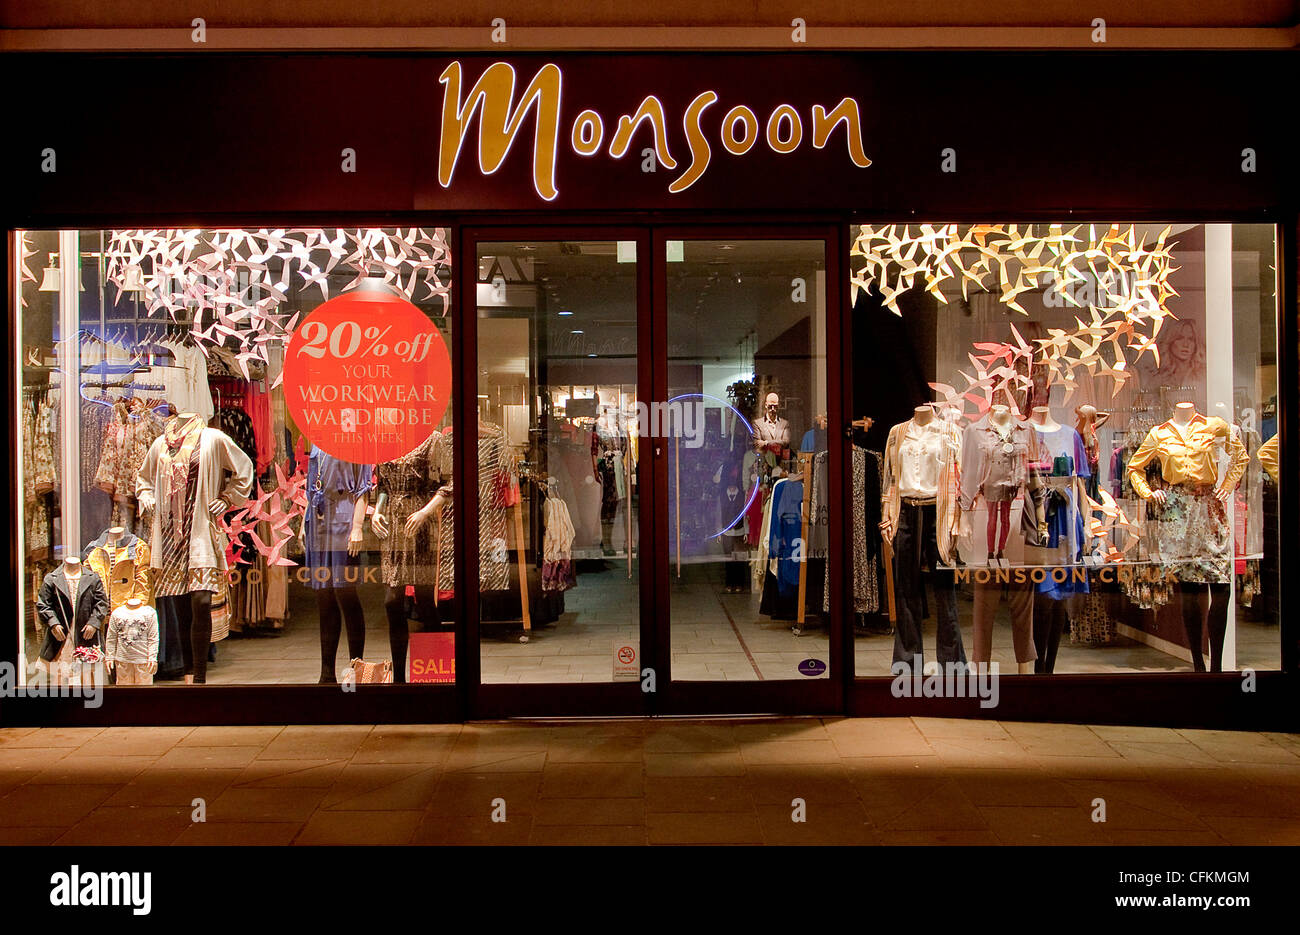 Monsoon Shop Store Illuminated Shop Window Display at night Canterbury Kent UK Stock Photo